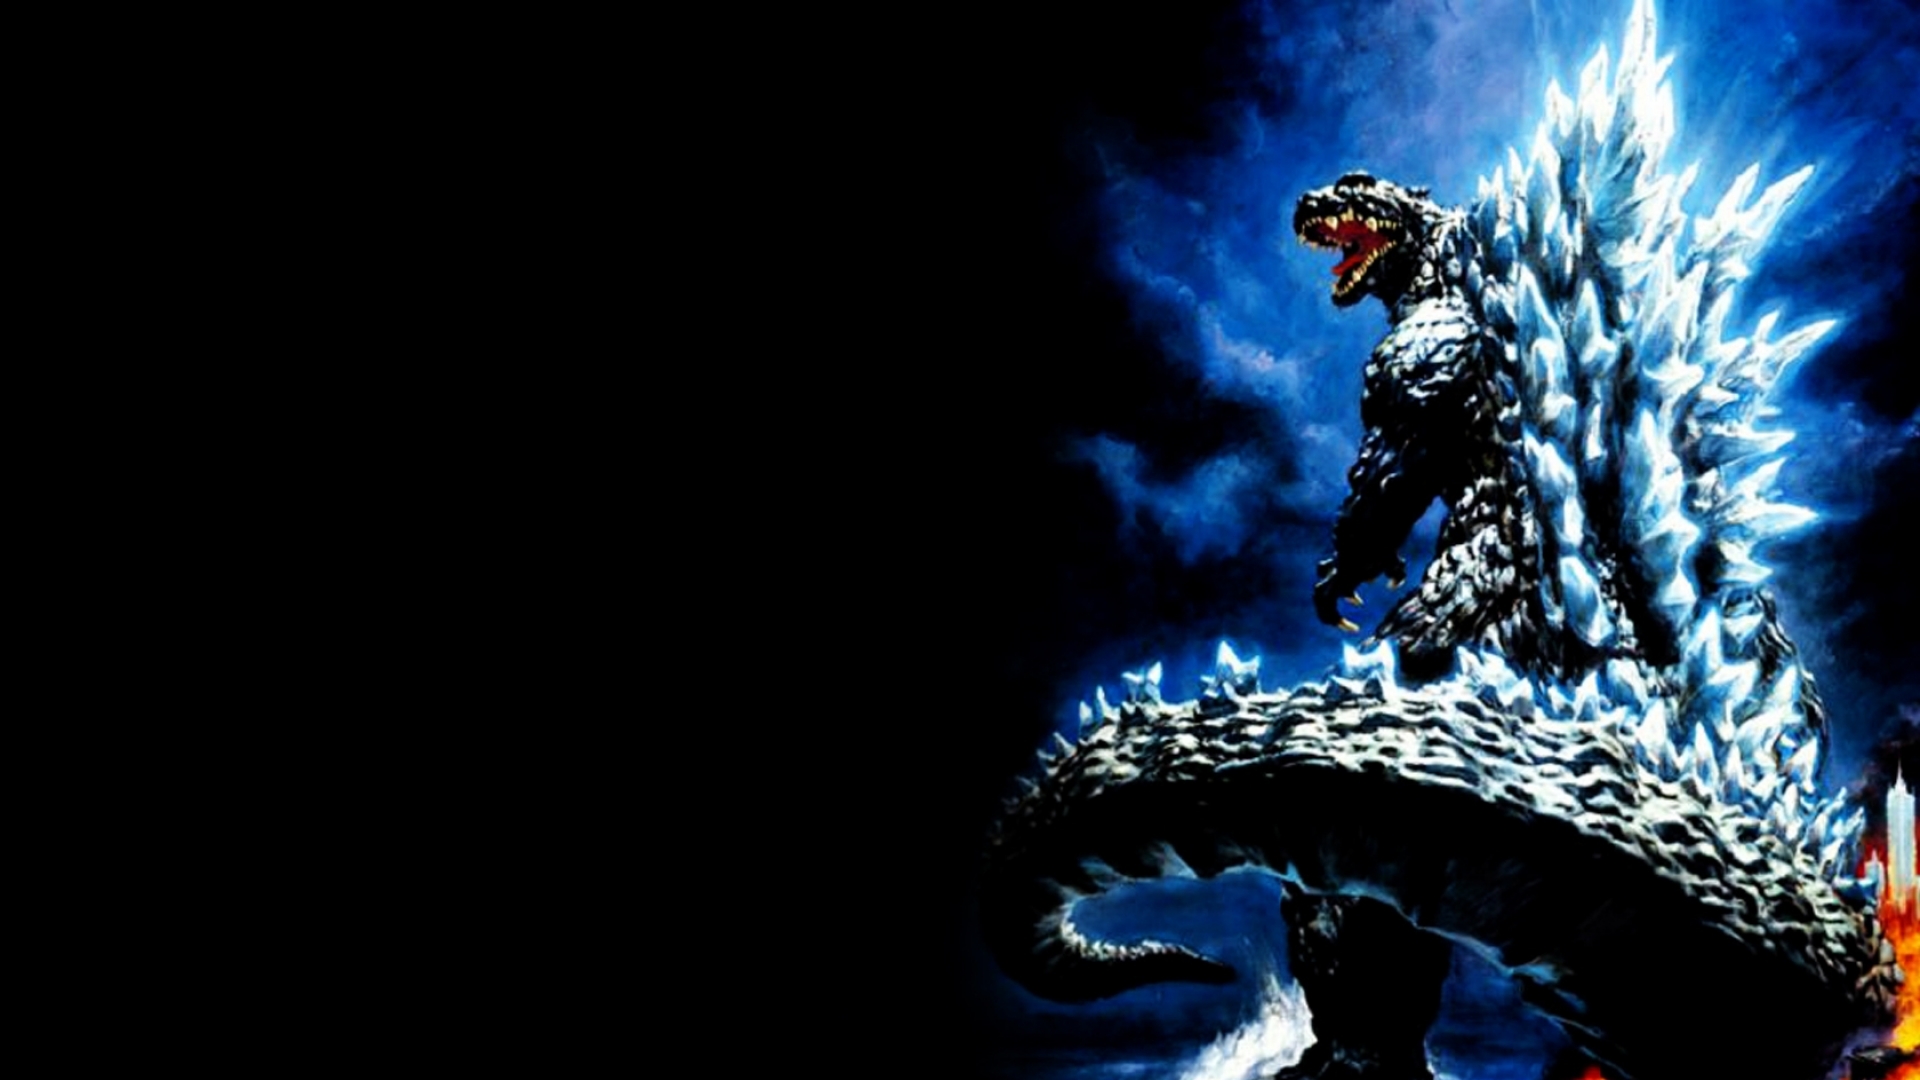 Godzilla lit up back wallpaper - Godzilla Wallpaper ...